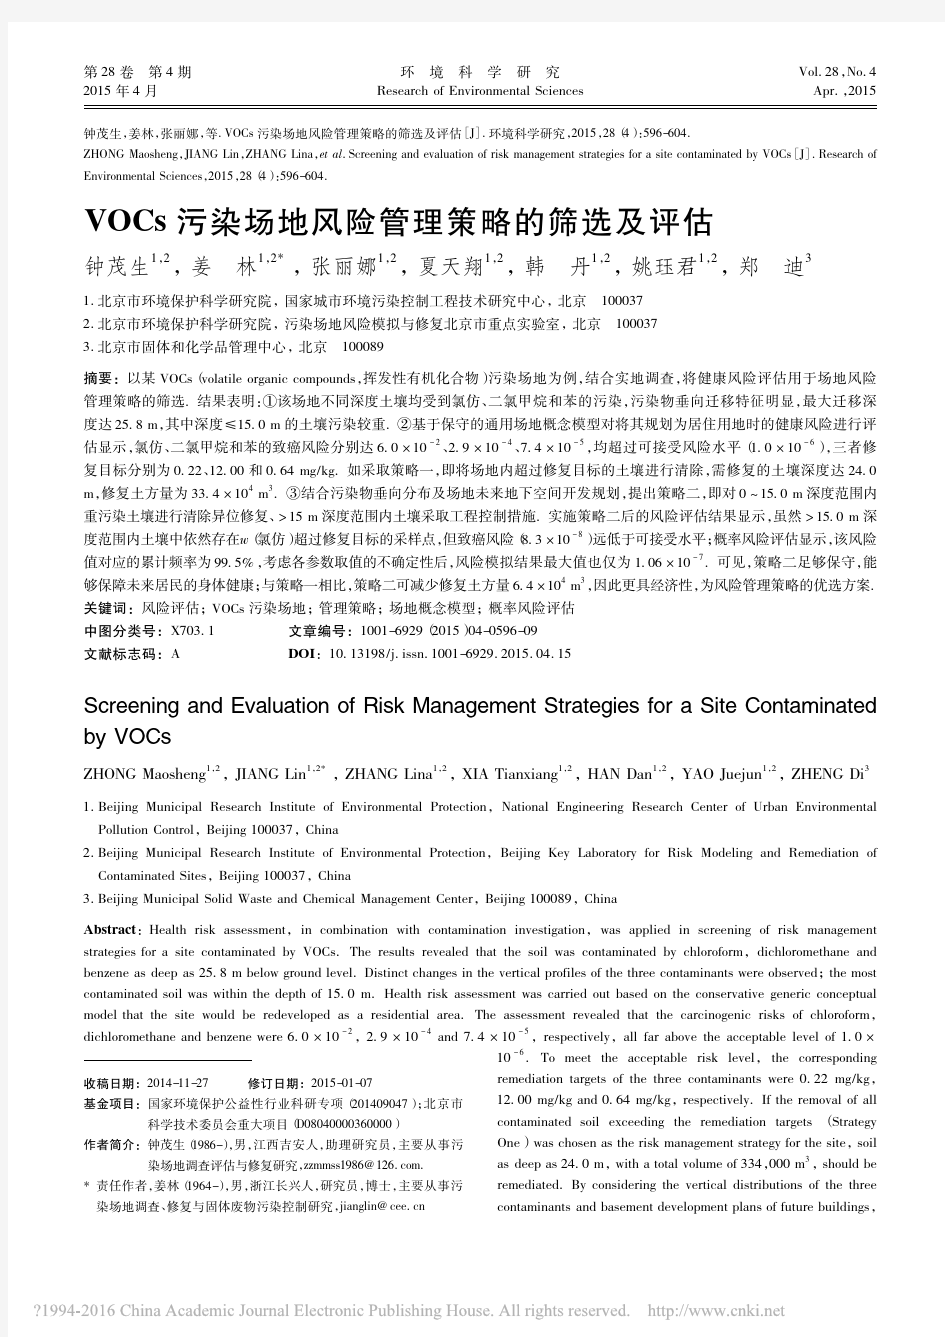 VOCs污染场地风险管理策略的筛选及评估_钟茂生